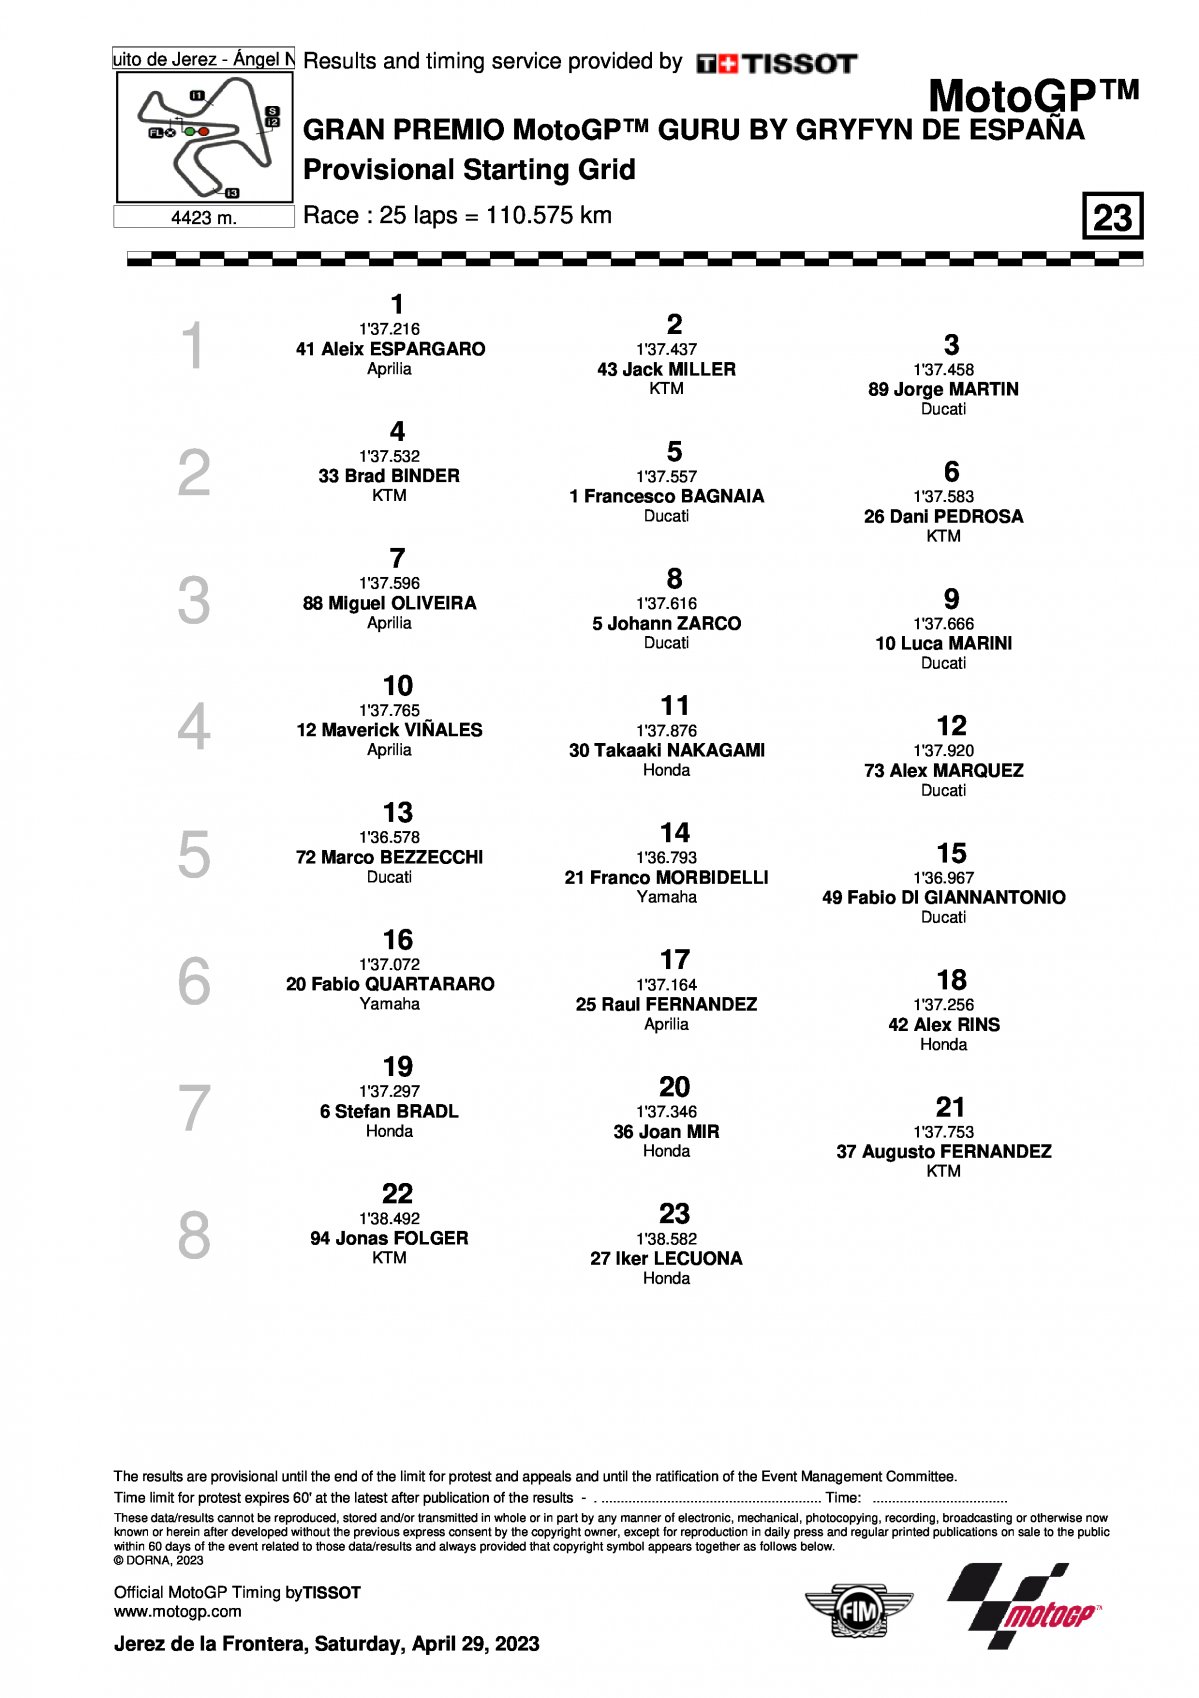 Стартовая решетка Гран-При Испании (SpanishGP) MotoGP 2023